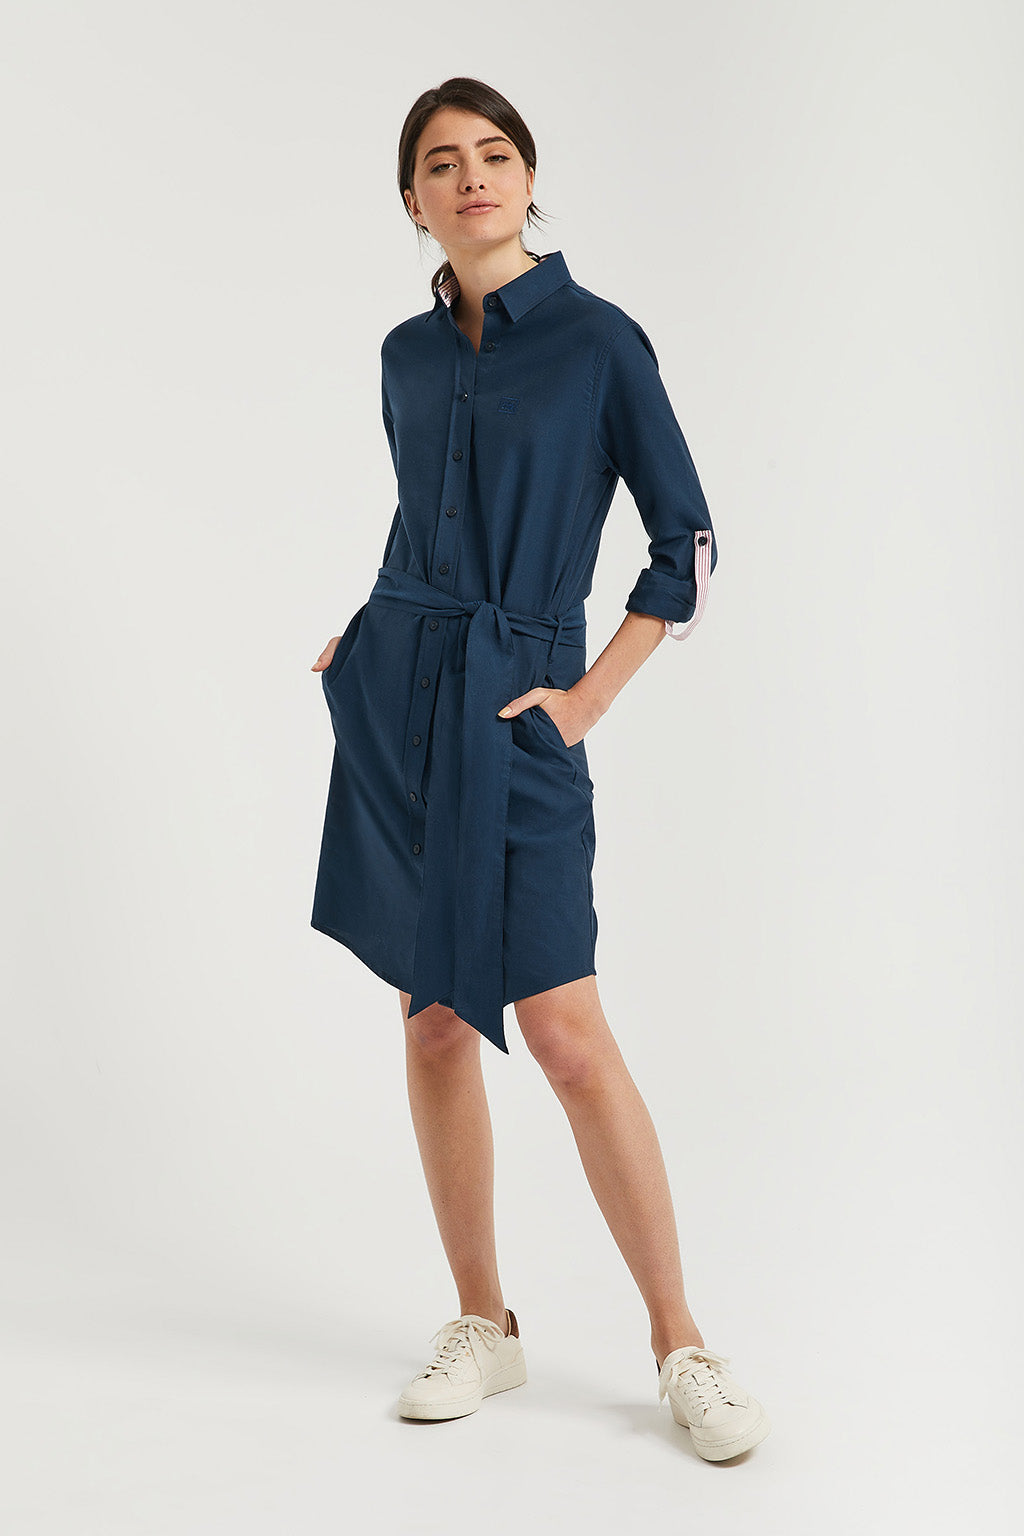 Vestido camisero azul marino de manga larga con bordado – Polo Club